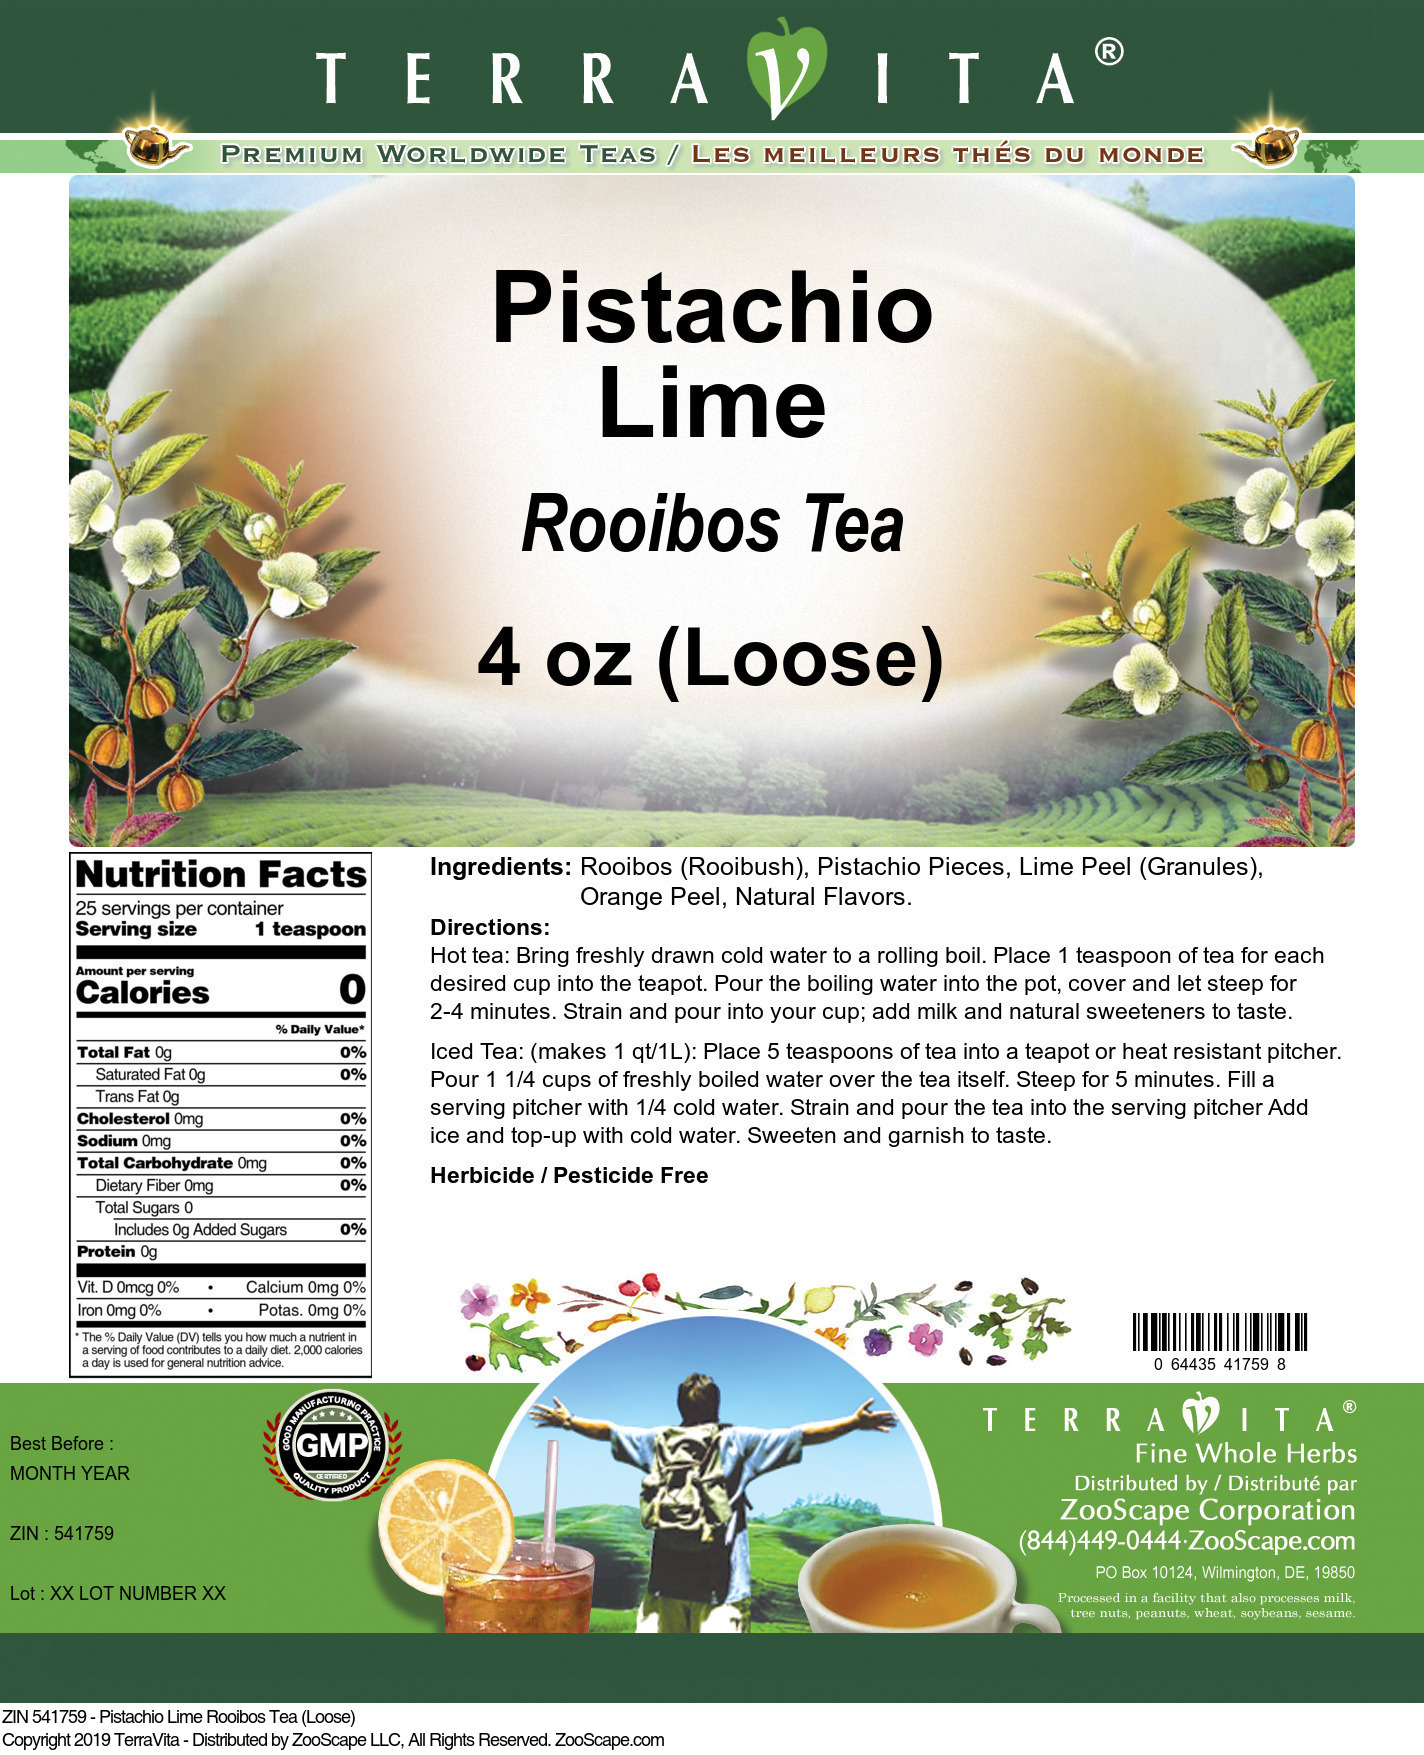 Pistachio Lime Rooibos Tea (Loose) - Label